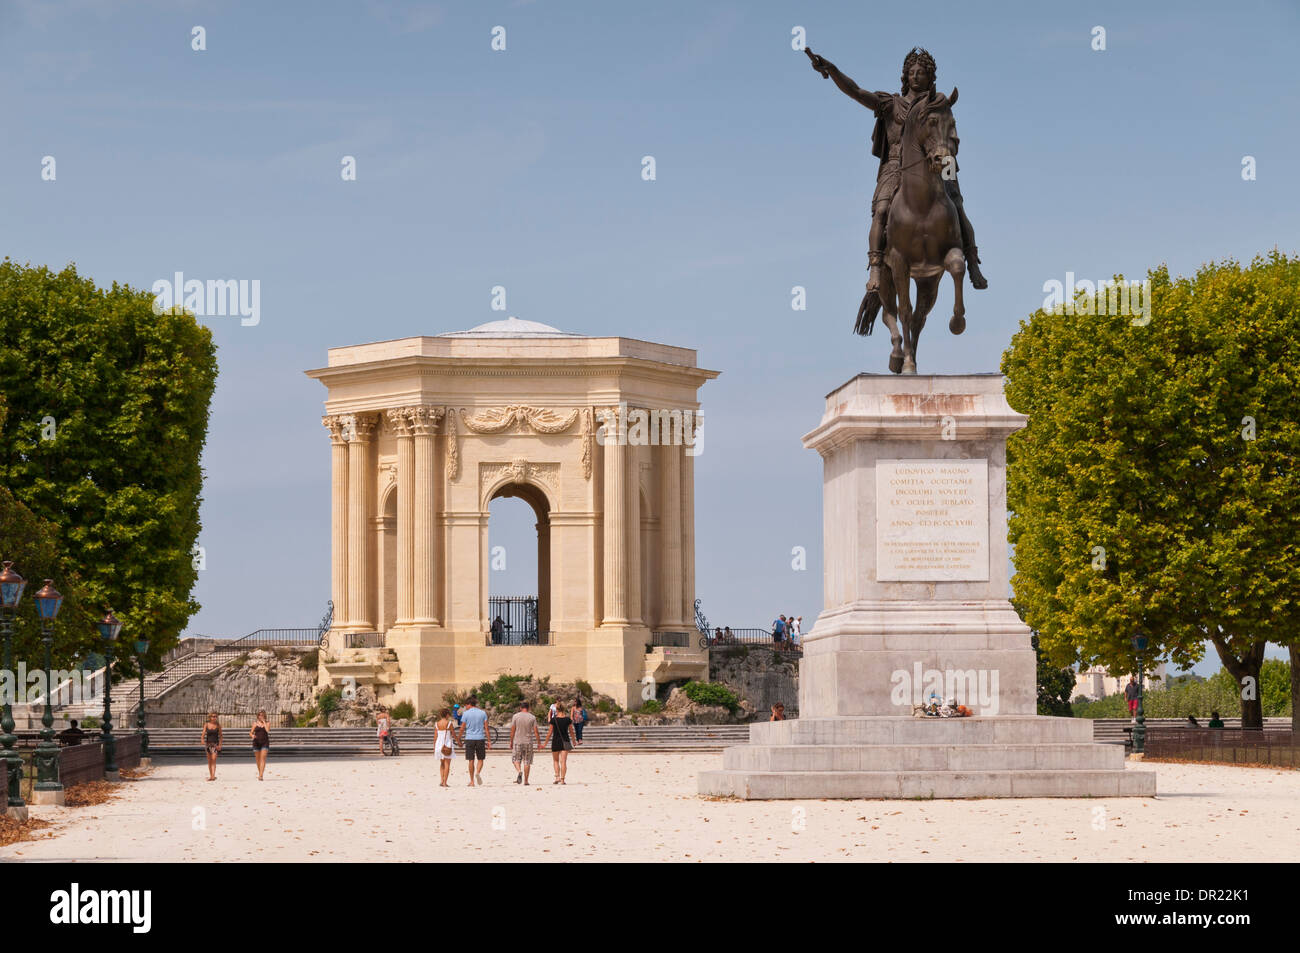 The mounted statue of Louis XIV and Chateau d'Eau, Place Royale du Peyrou, Montpellier, Hérault, Languedoc-Roussillon, France Stock Photo